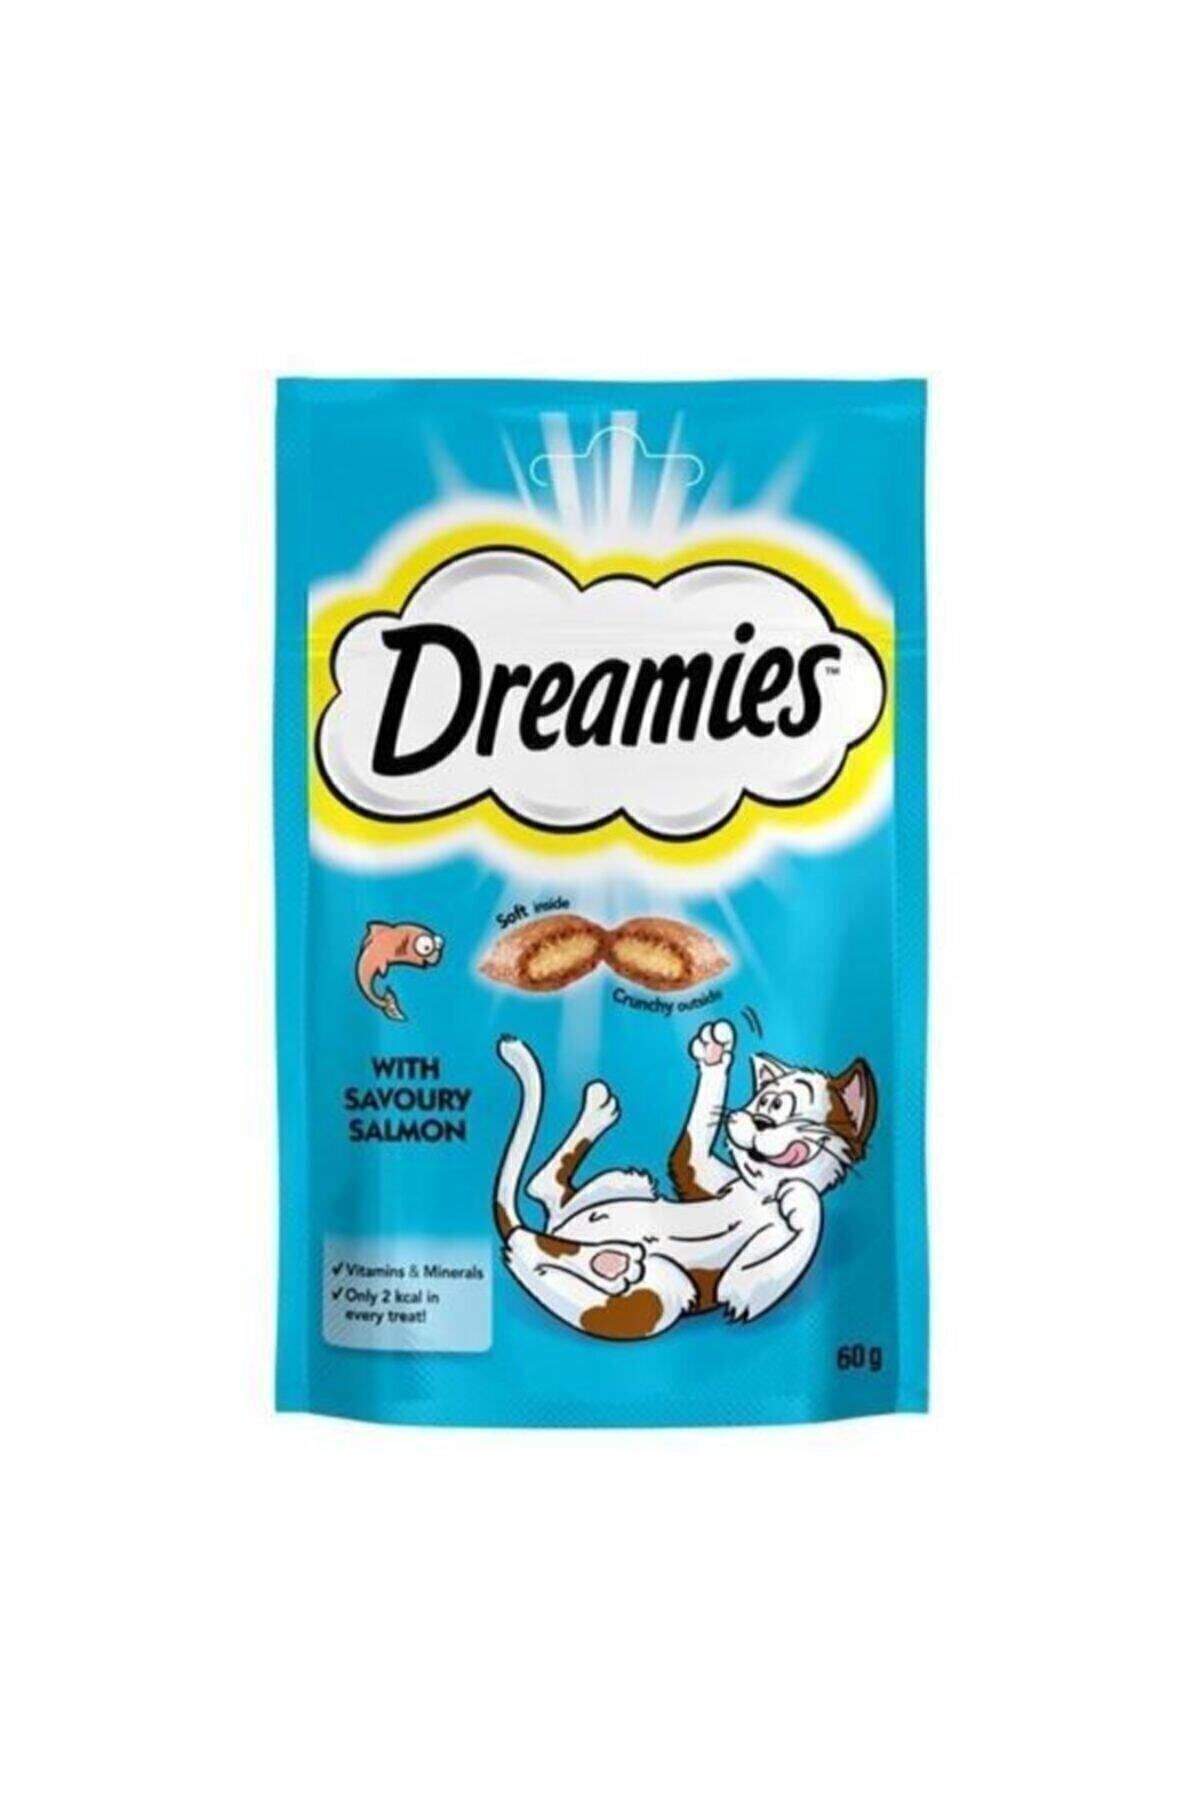 Dreamies Somonlu Kedi Ödül Maması 60 gr